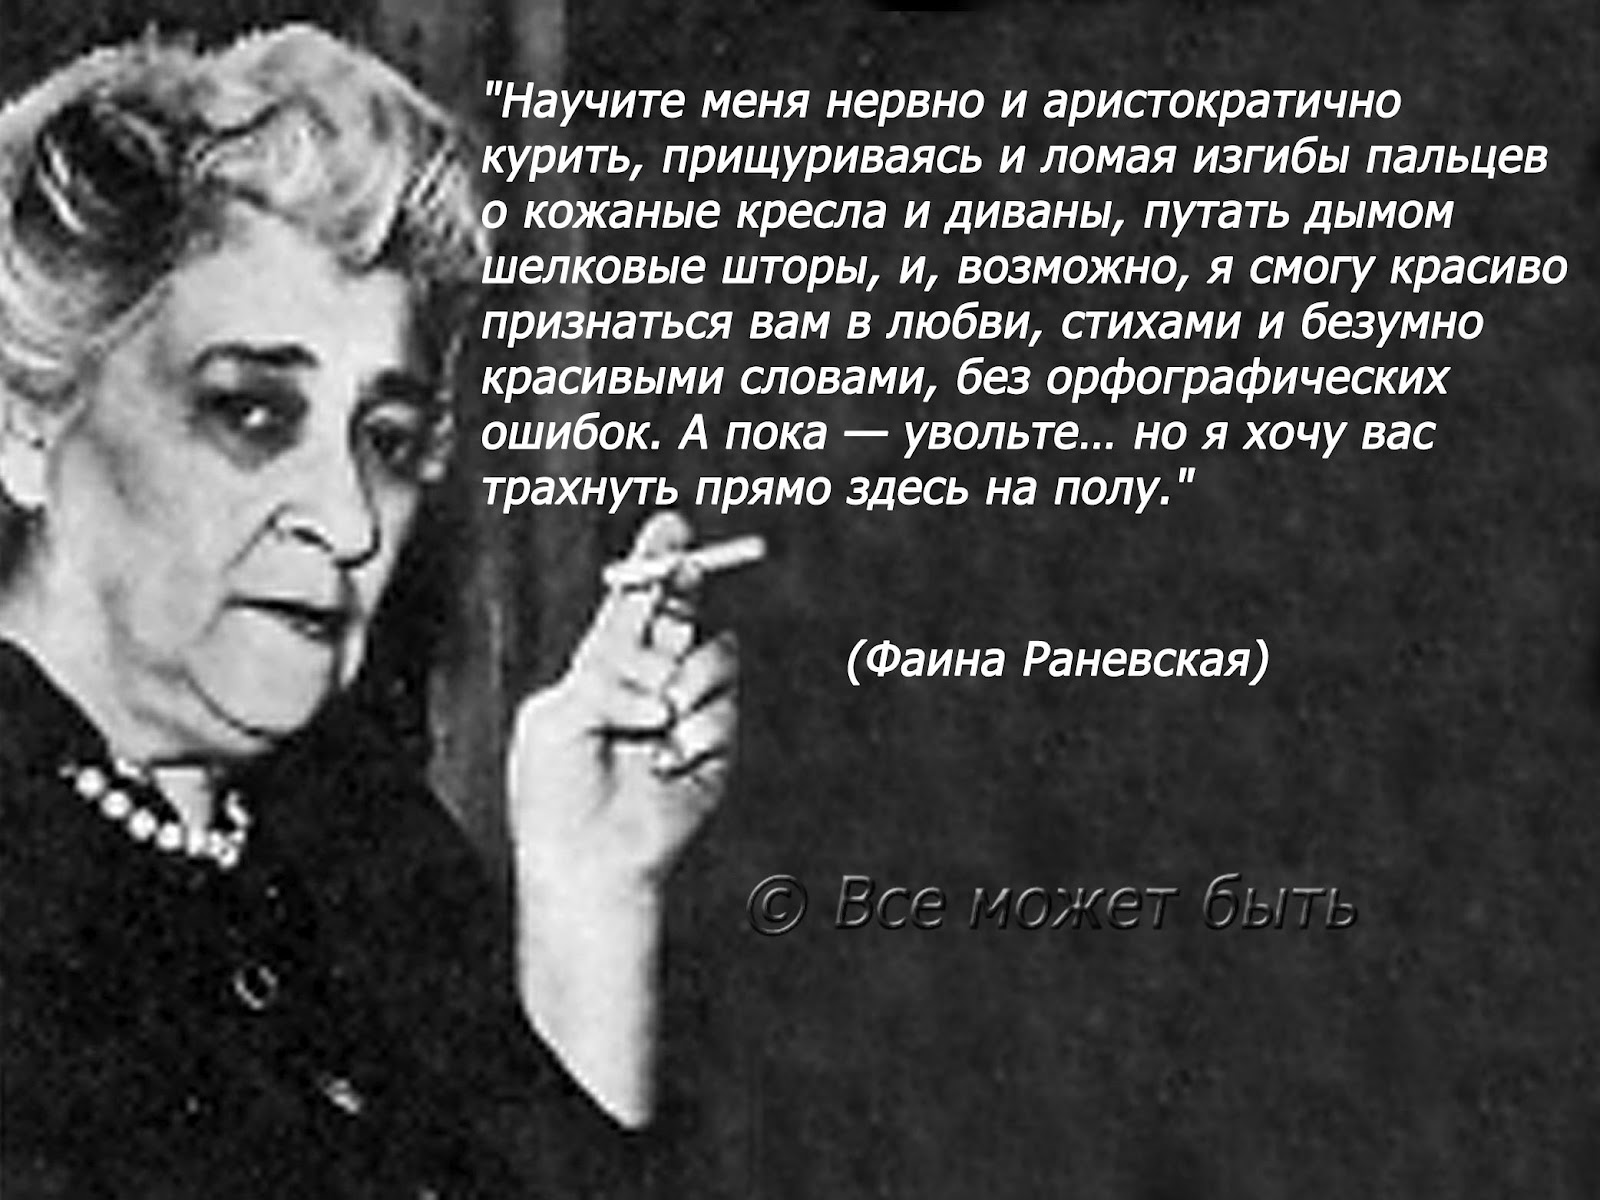 faina_ranevskaya.jpg